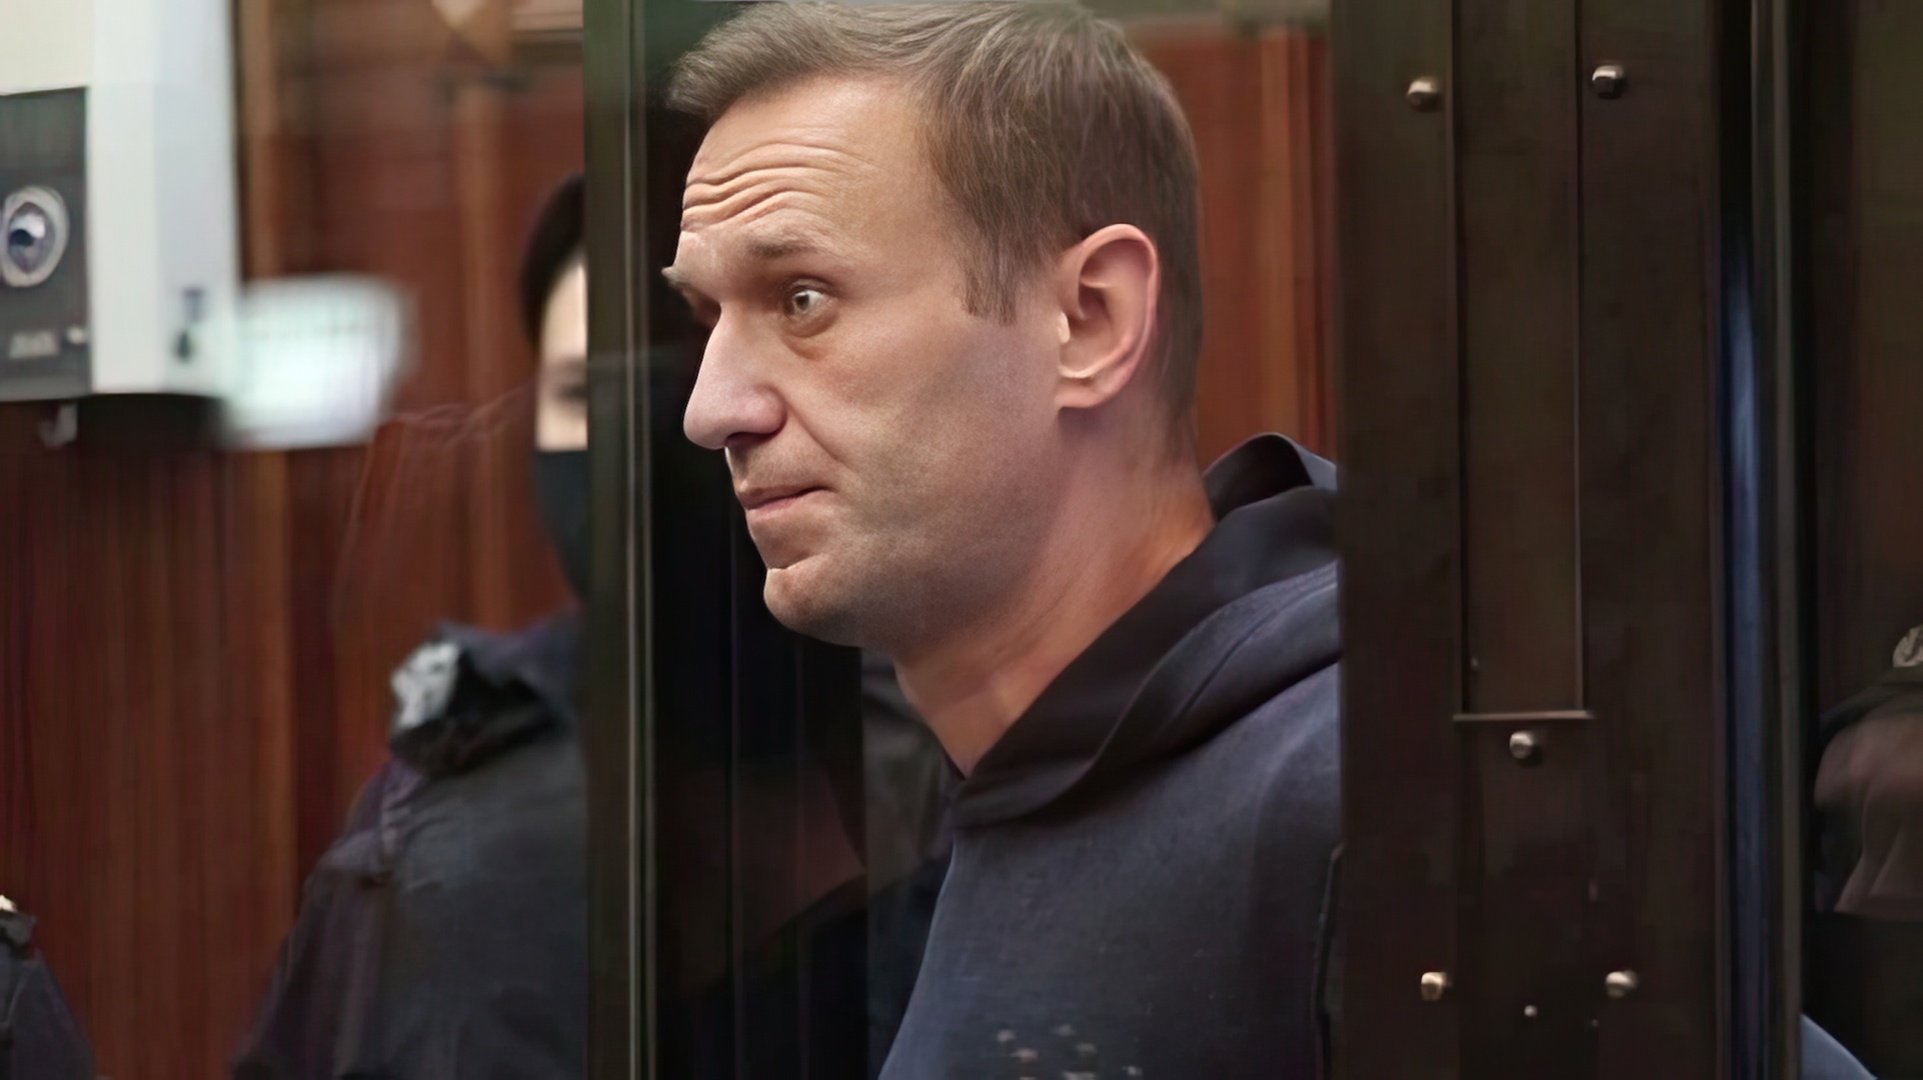 Alexey Navalny on trial, February 2021